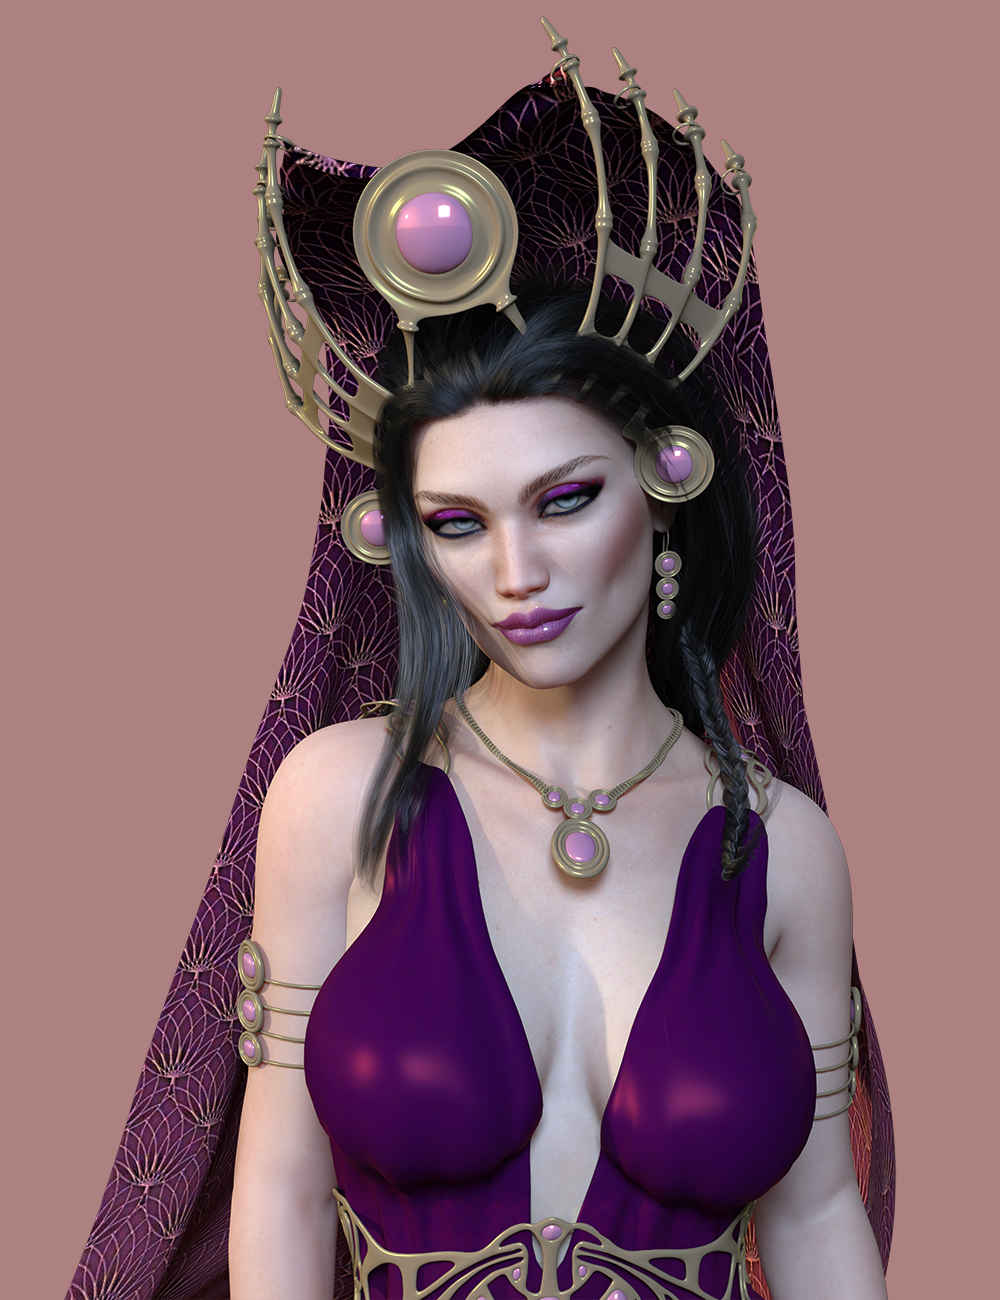 Nessalaeyn for Genesis 8 Female by: hotlilme74, 3D Models by Daz 3D